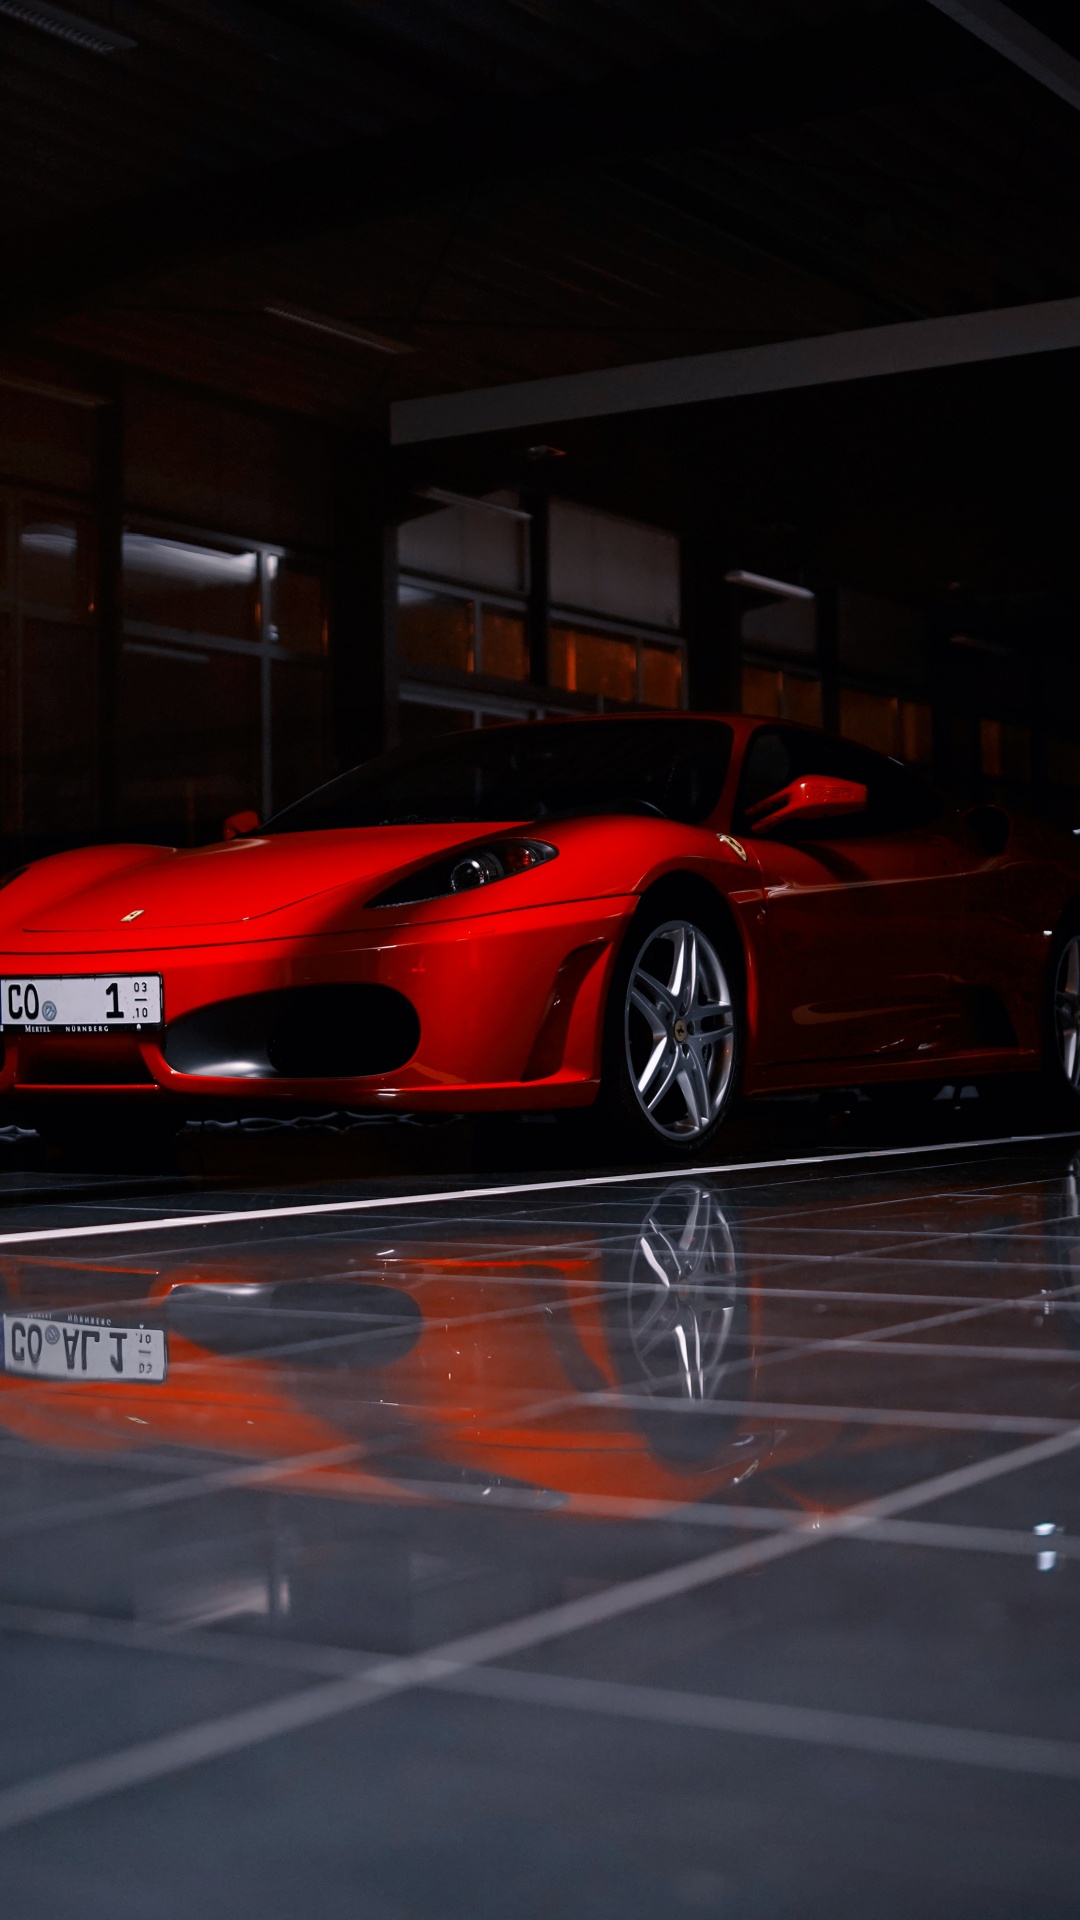 Ferrari Rouge 458 Italia Garée Sur Parking. Wallpaper in 1080x1920 Resolution